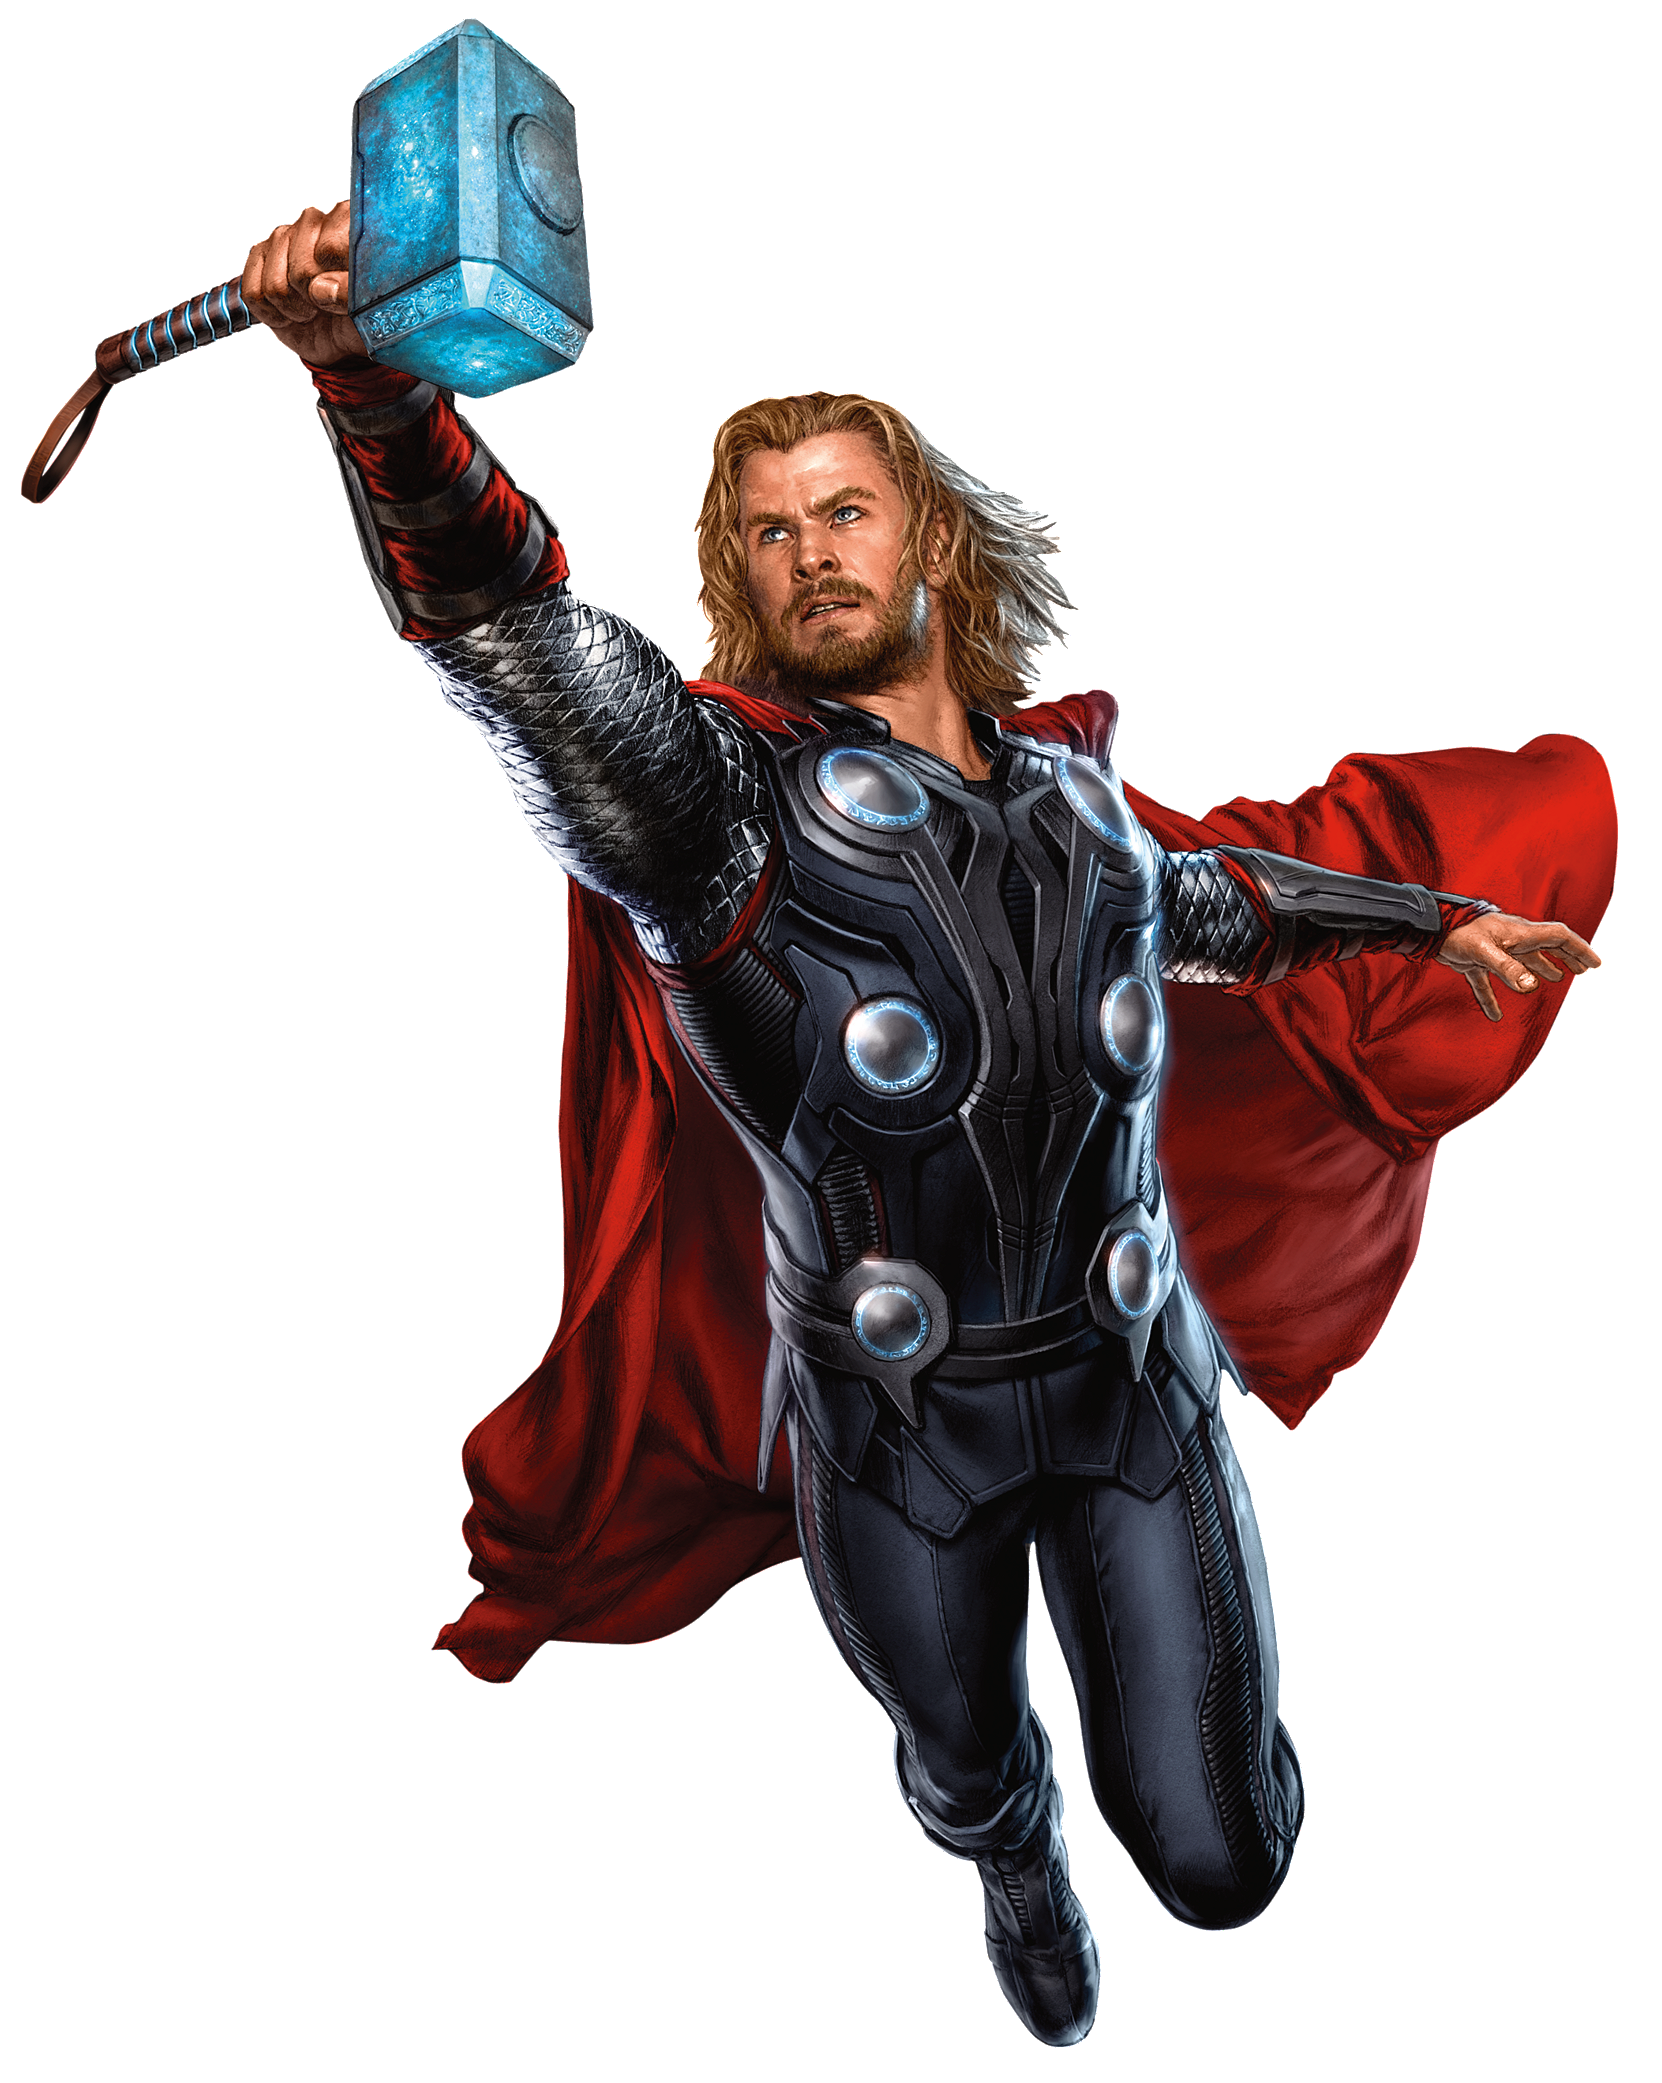 Image - Thor2-Avengers.png - Disney Wiki